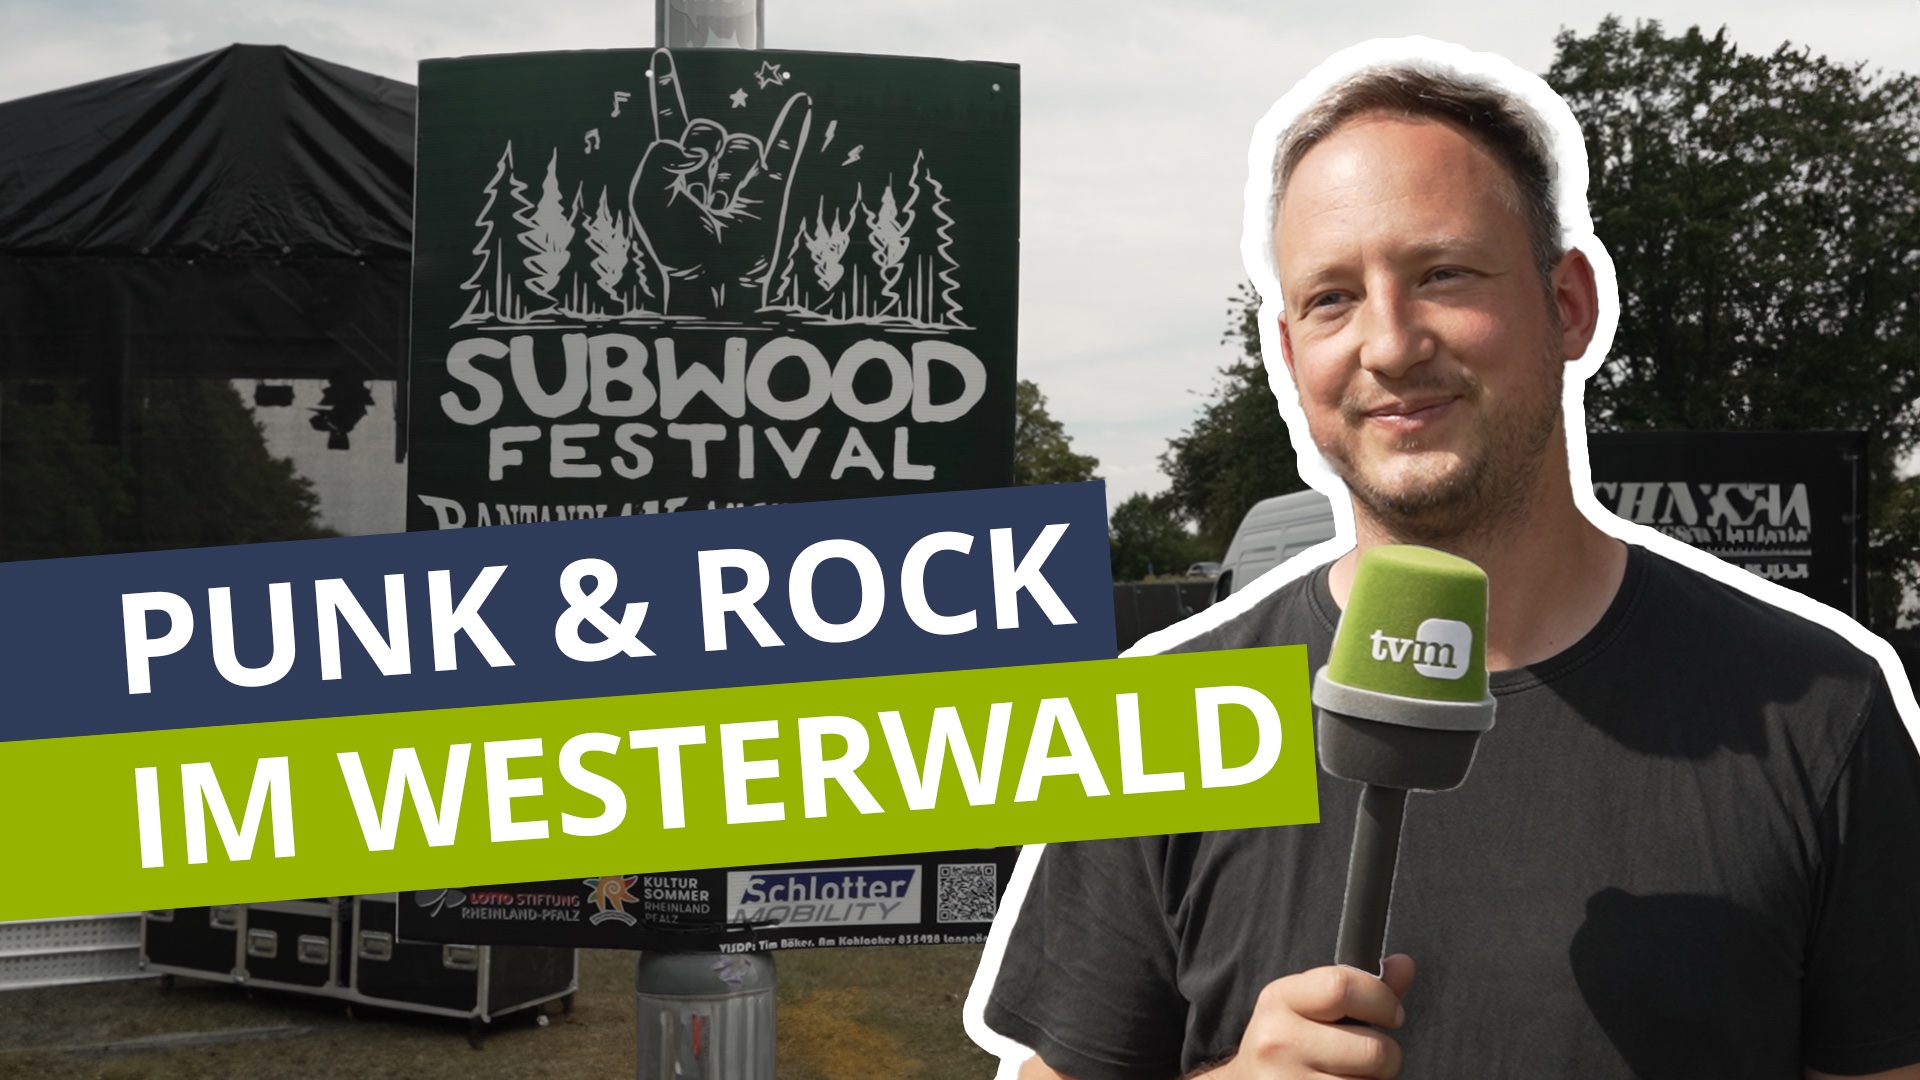 Subwood Festival startet heute - Punk & Rock im Westerwald